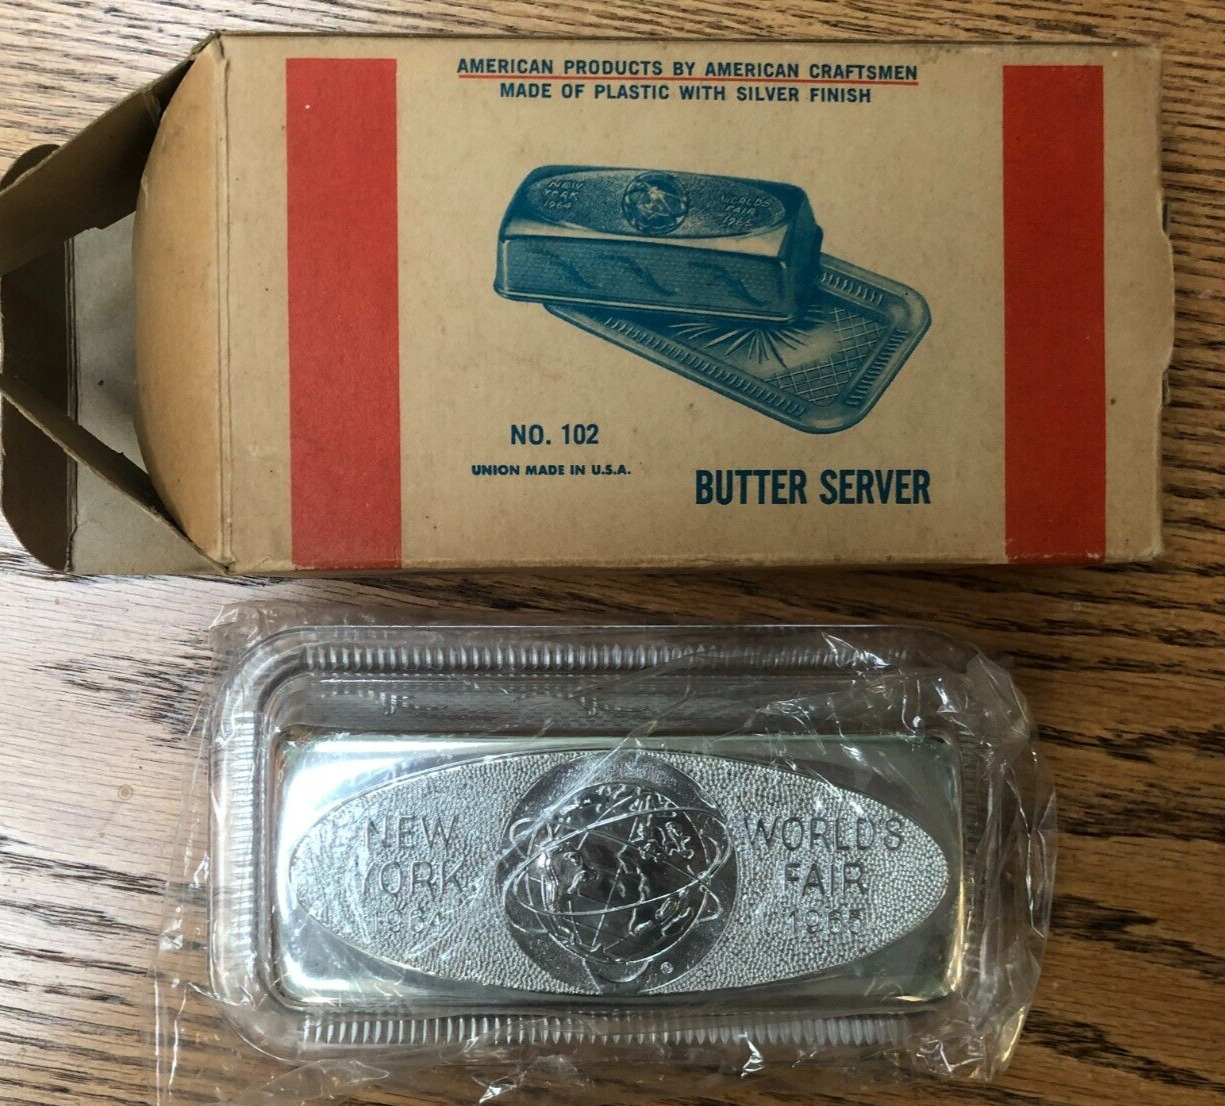 1964-65 New York World's Fair Plastic Unisphere Butter Server in original box